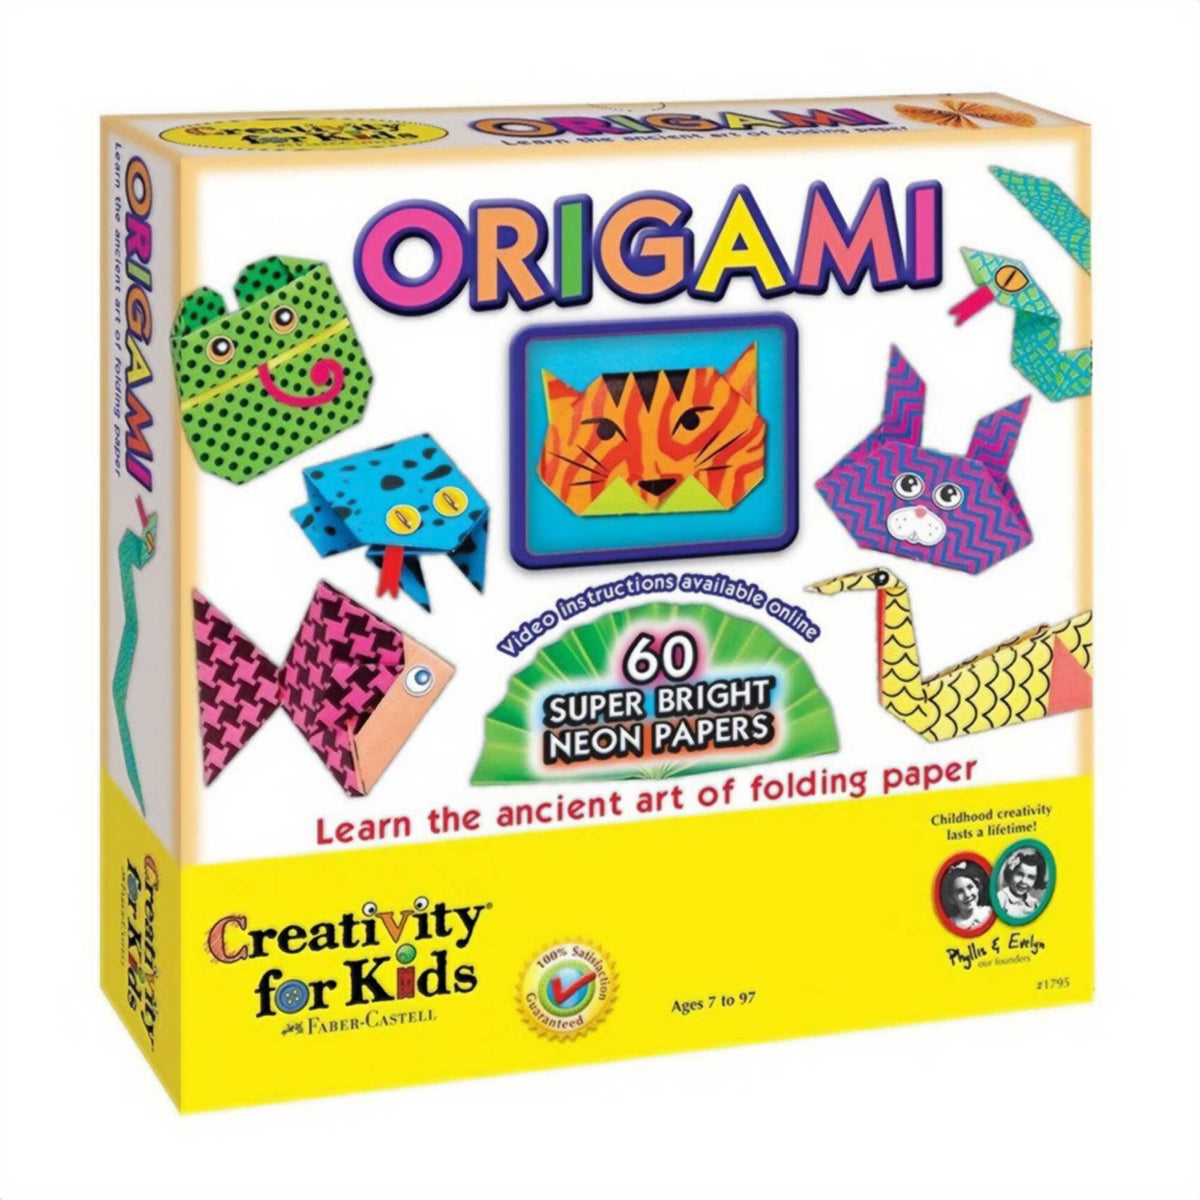 Creativity for kids - Neon Origami